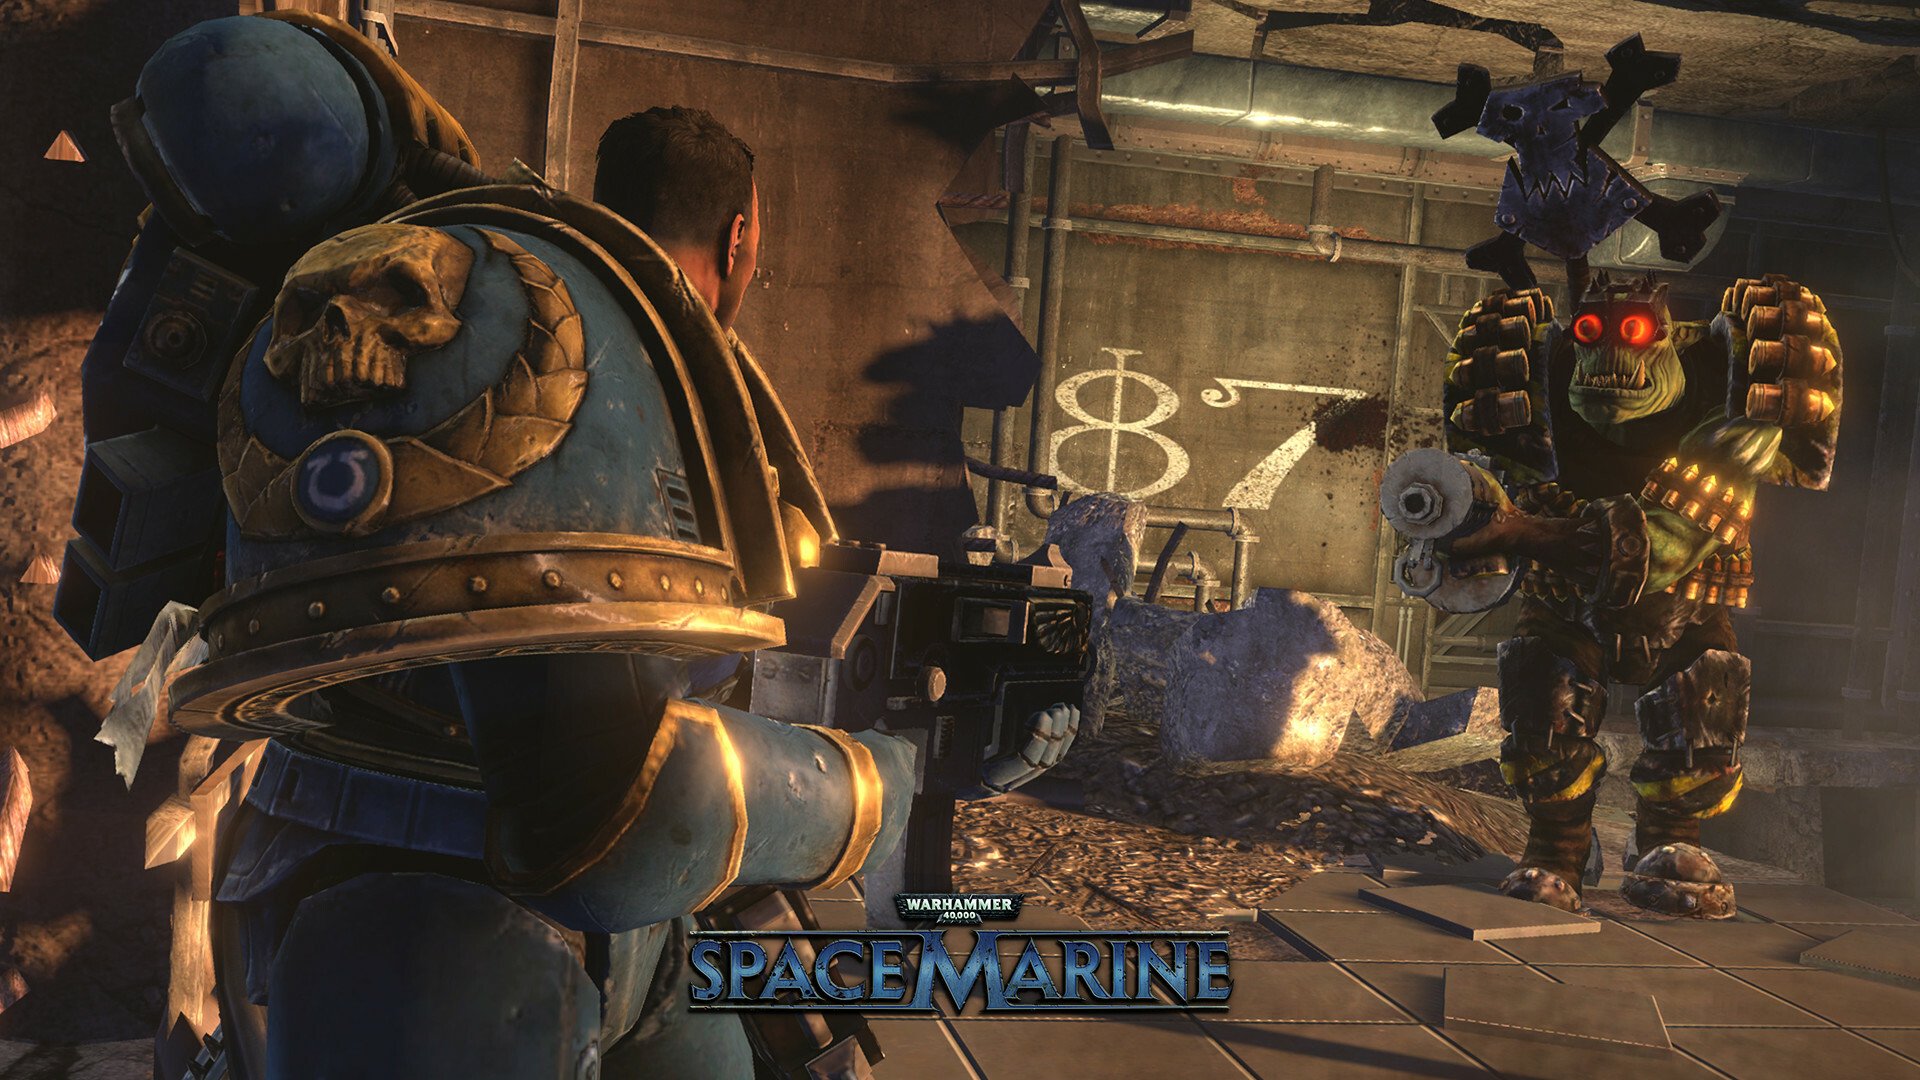 Скриншот 2 к игре Warhammer 40000: Space Marine v1.0.1 [GOG] (2011)